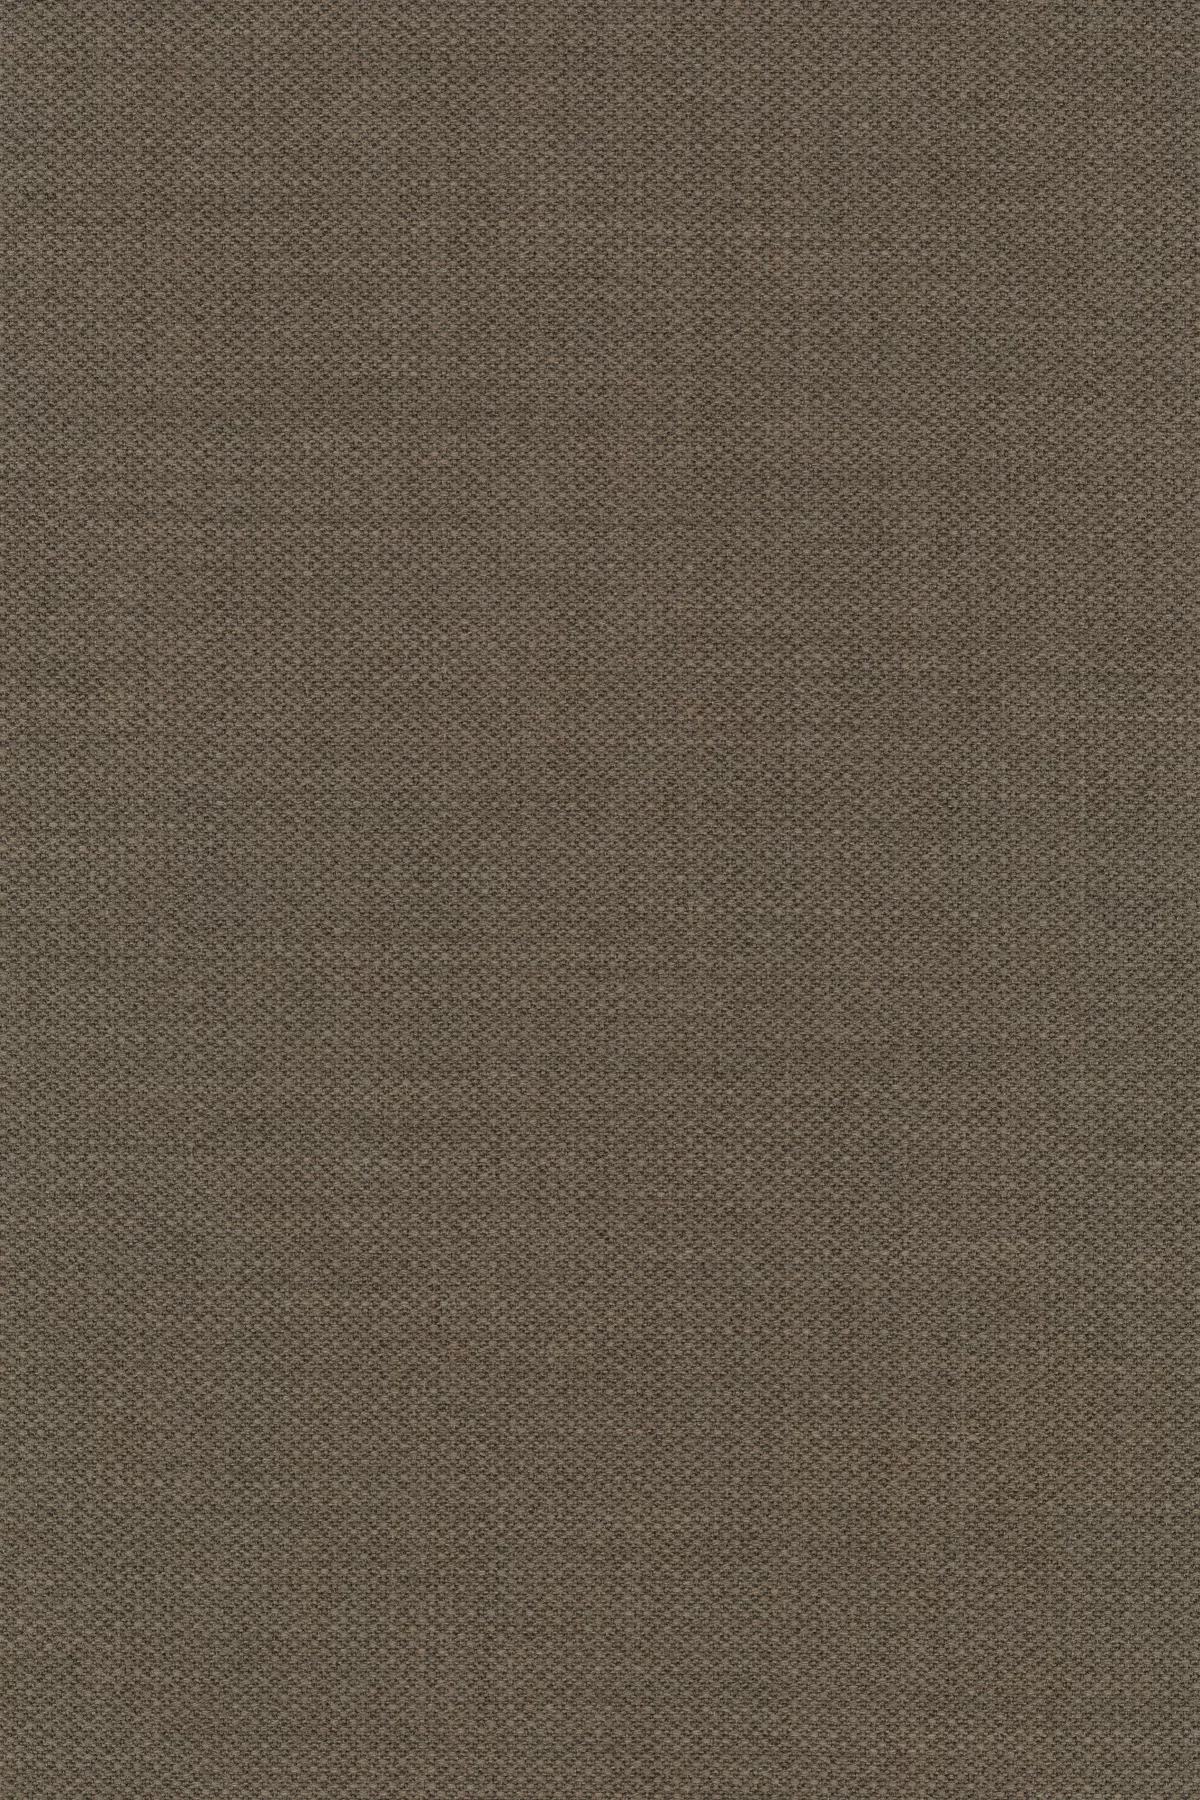 Fabric sample Fiord 271 grey